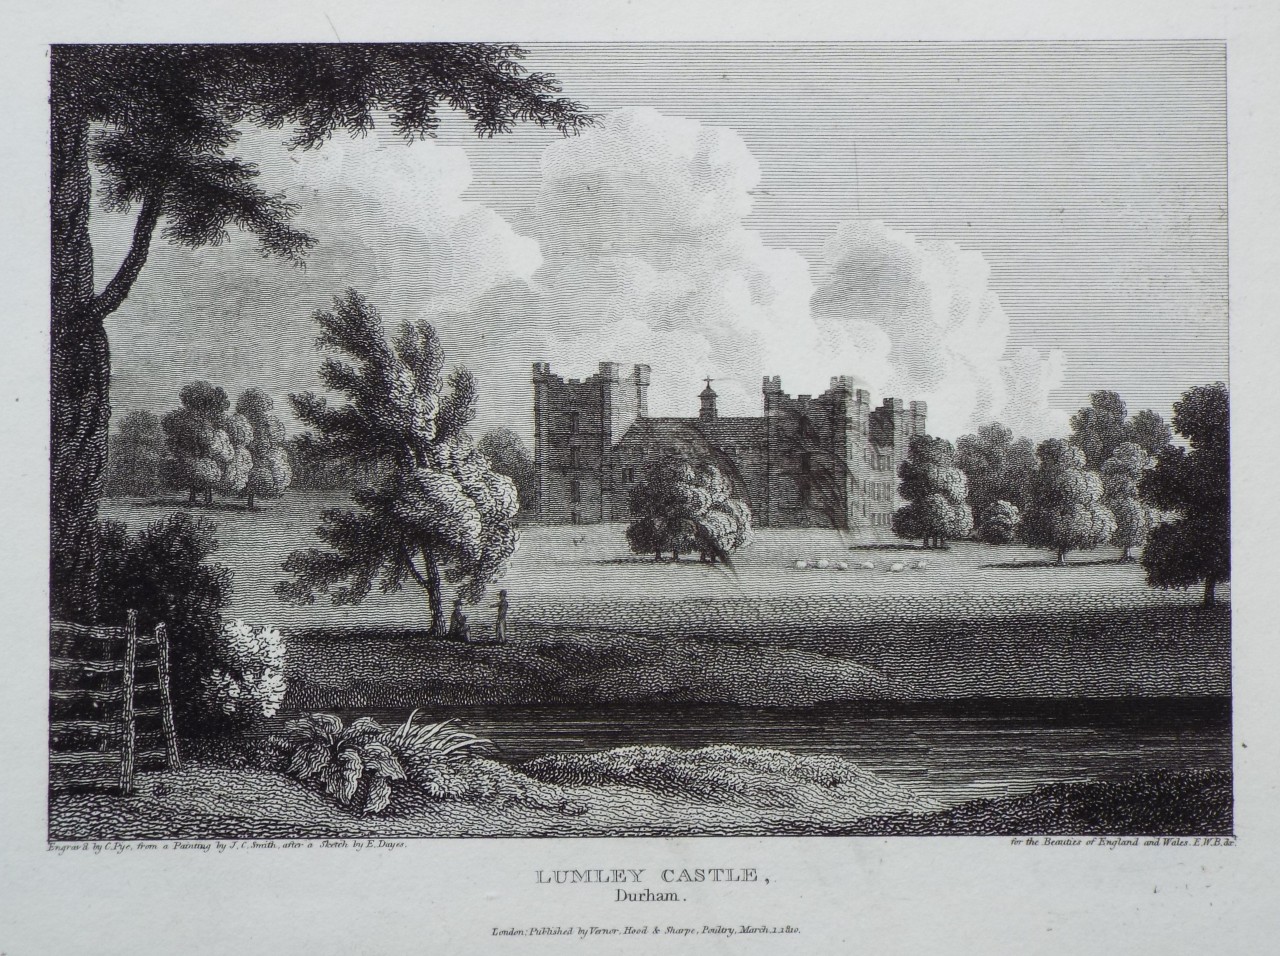 Print - Lumley Castle, Durham. - Pye